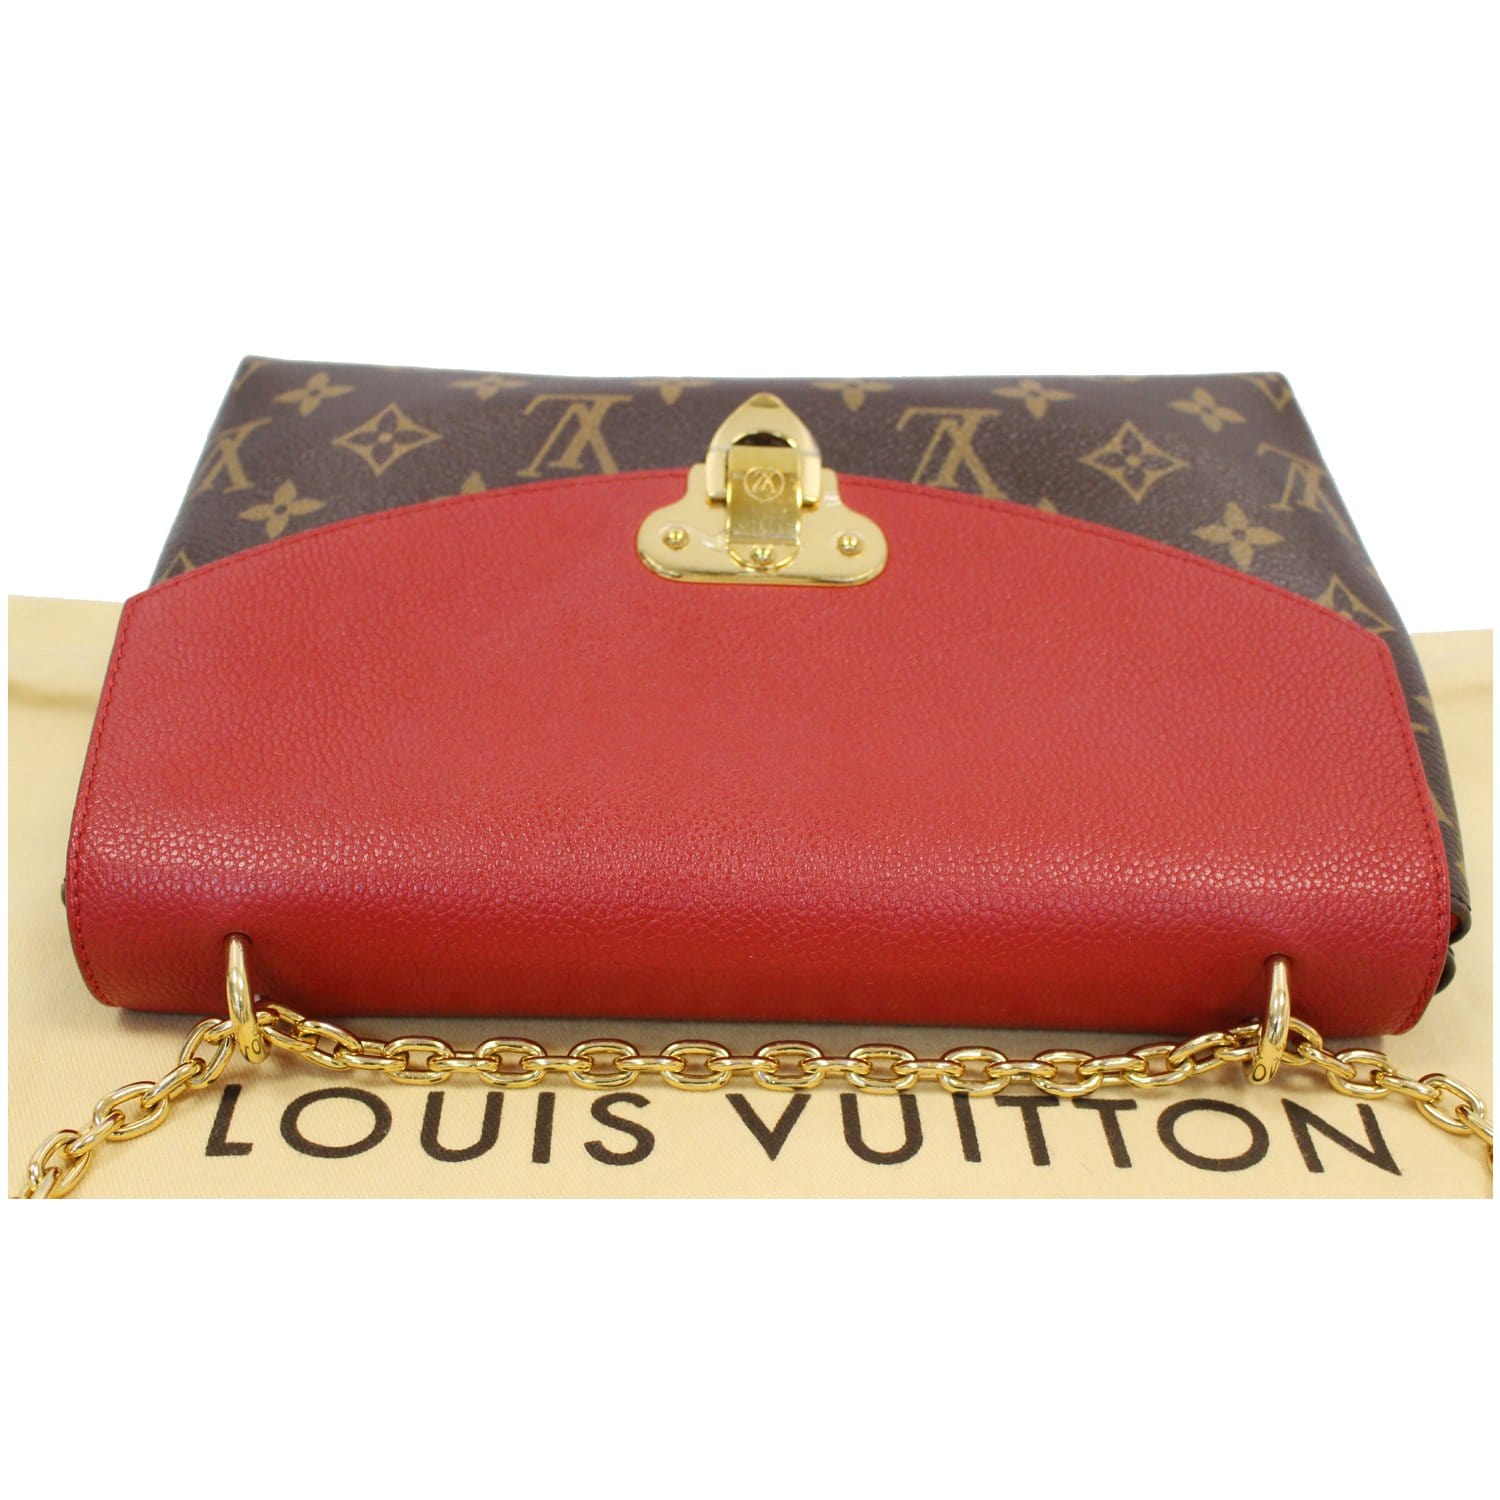 Brand new Louis Vuitton saint placide red